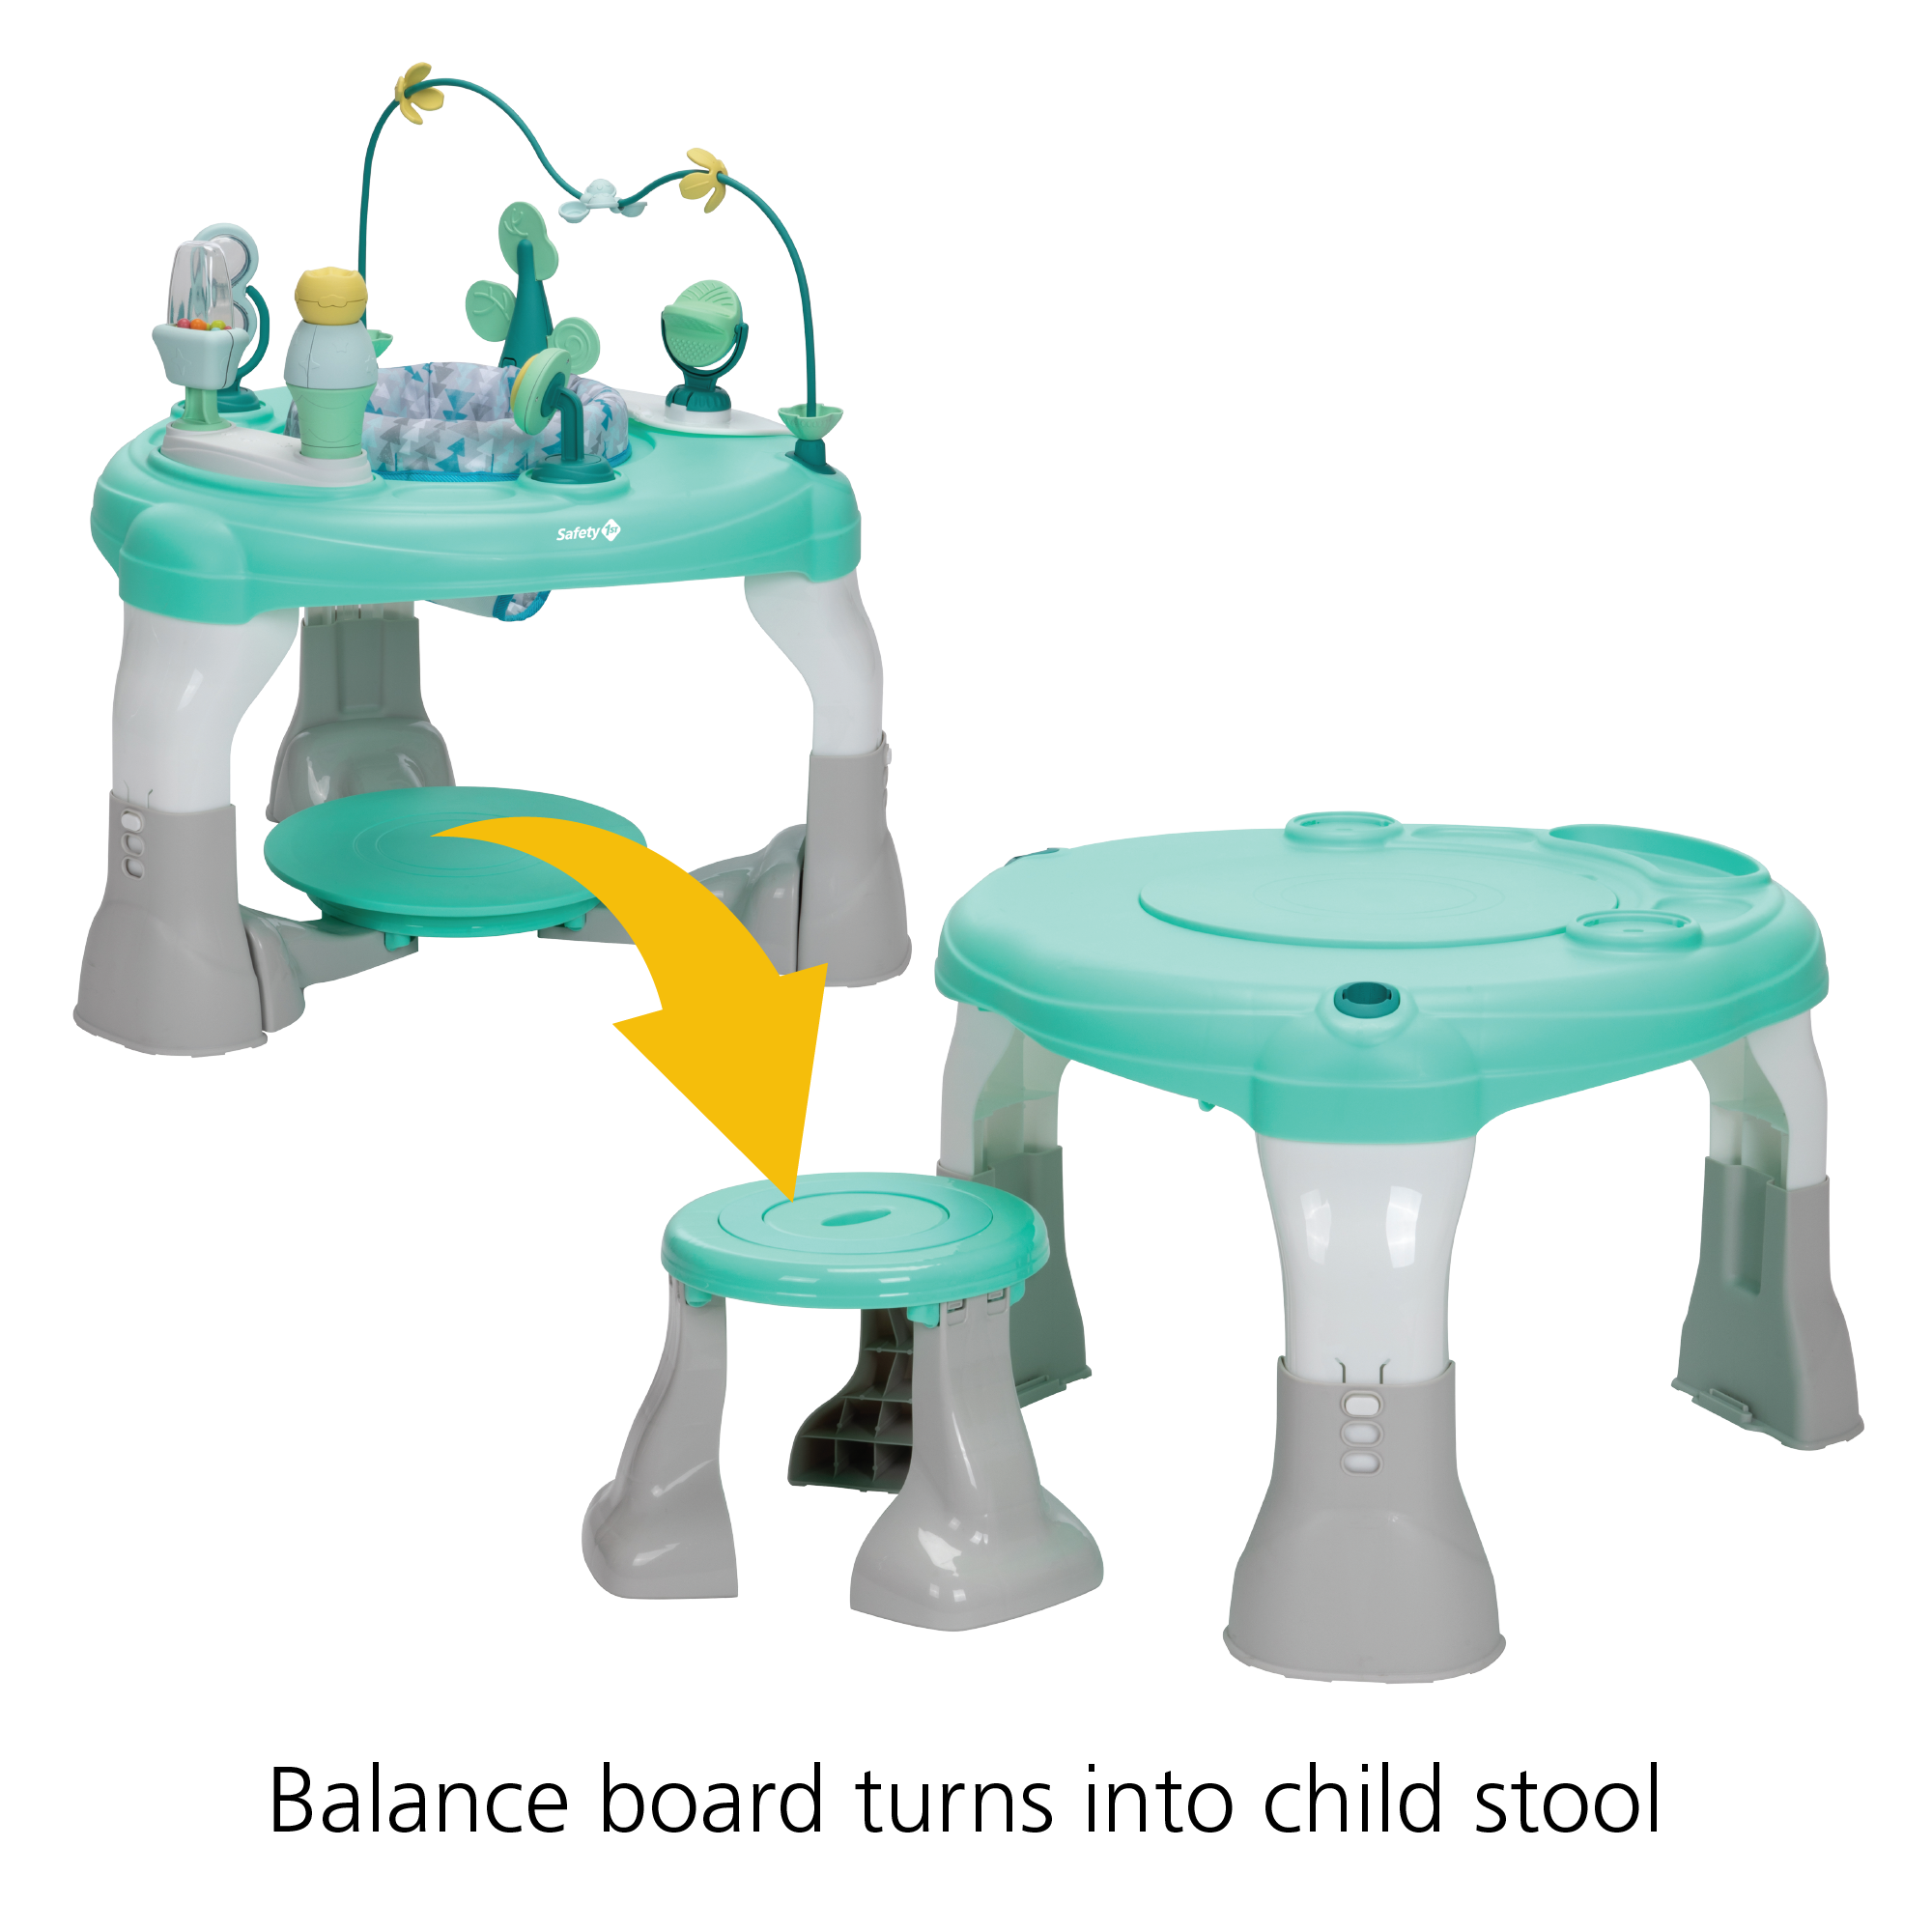 Balance board turns into child stool